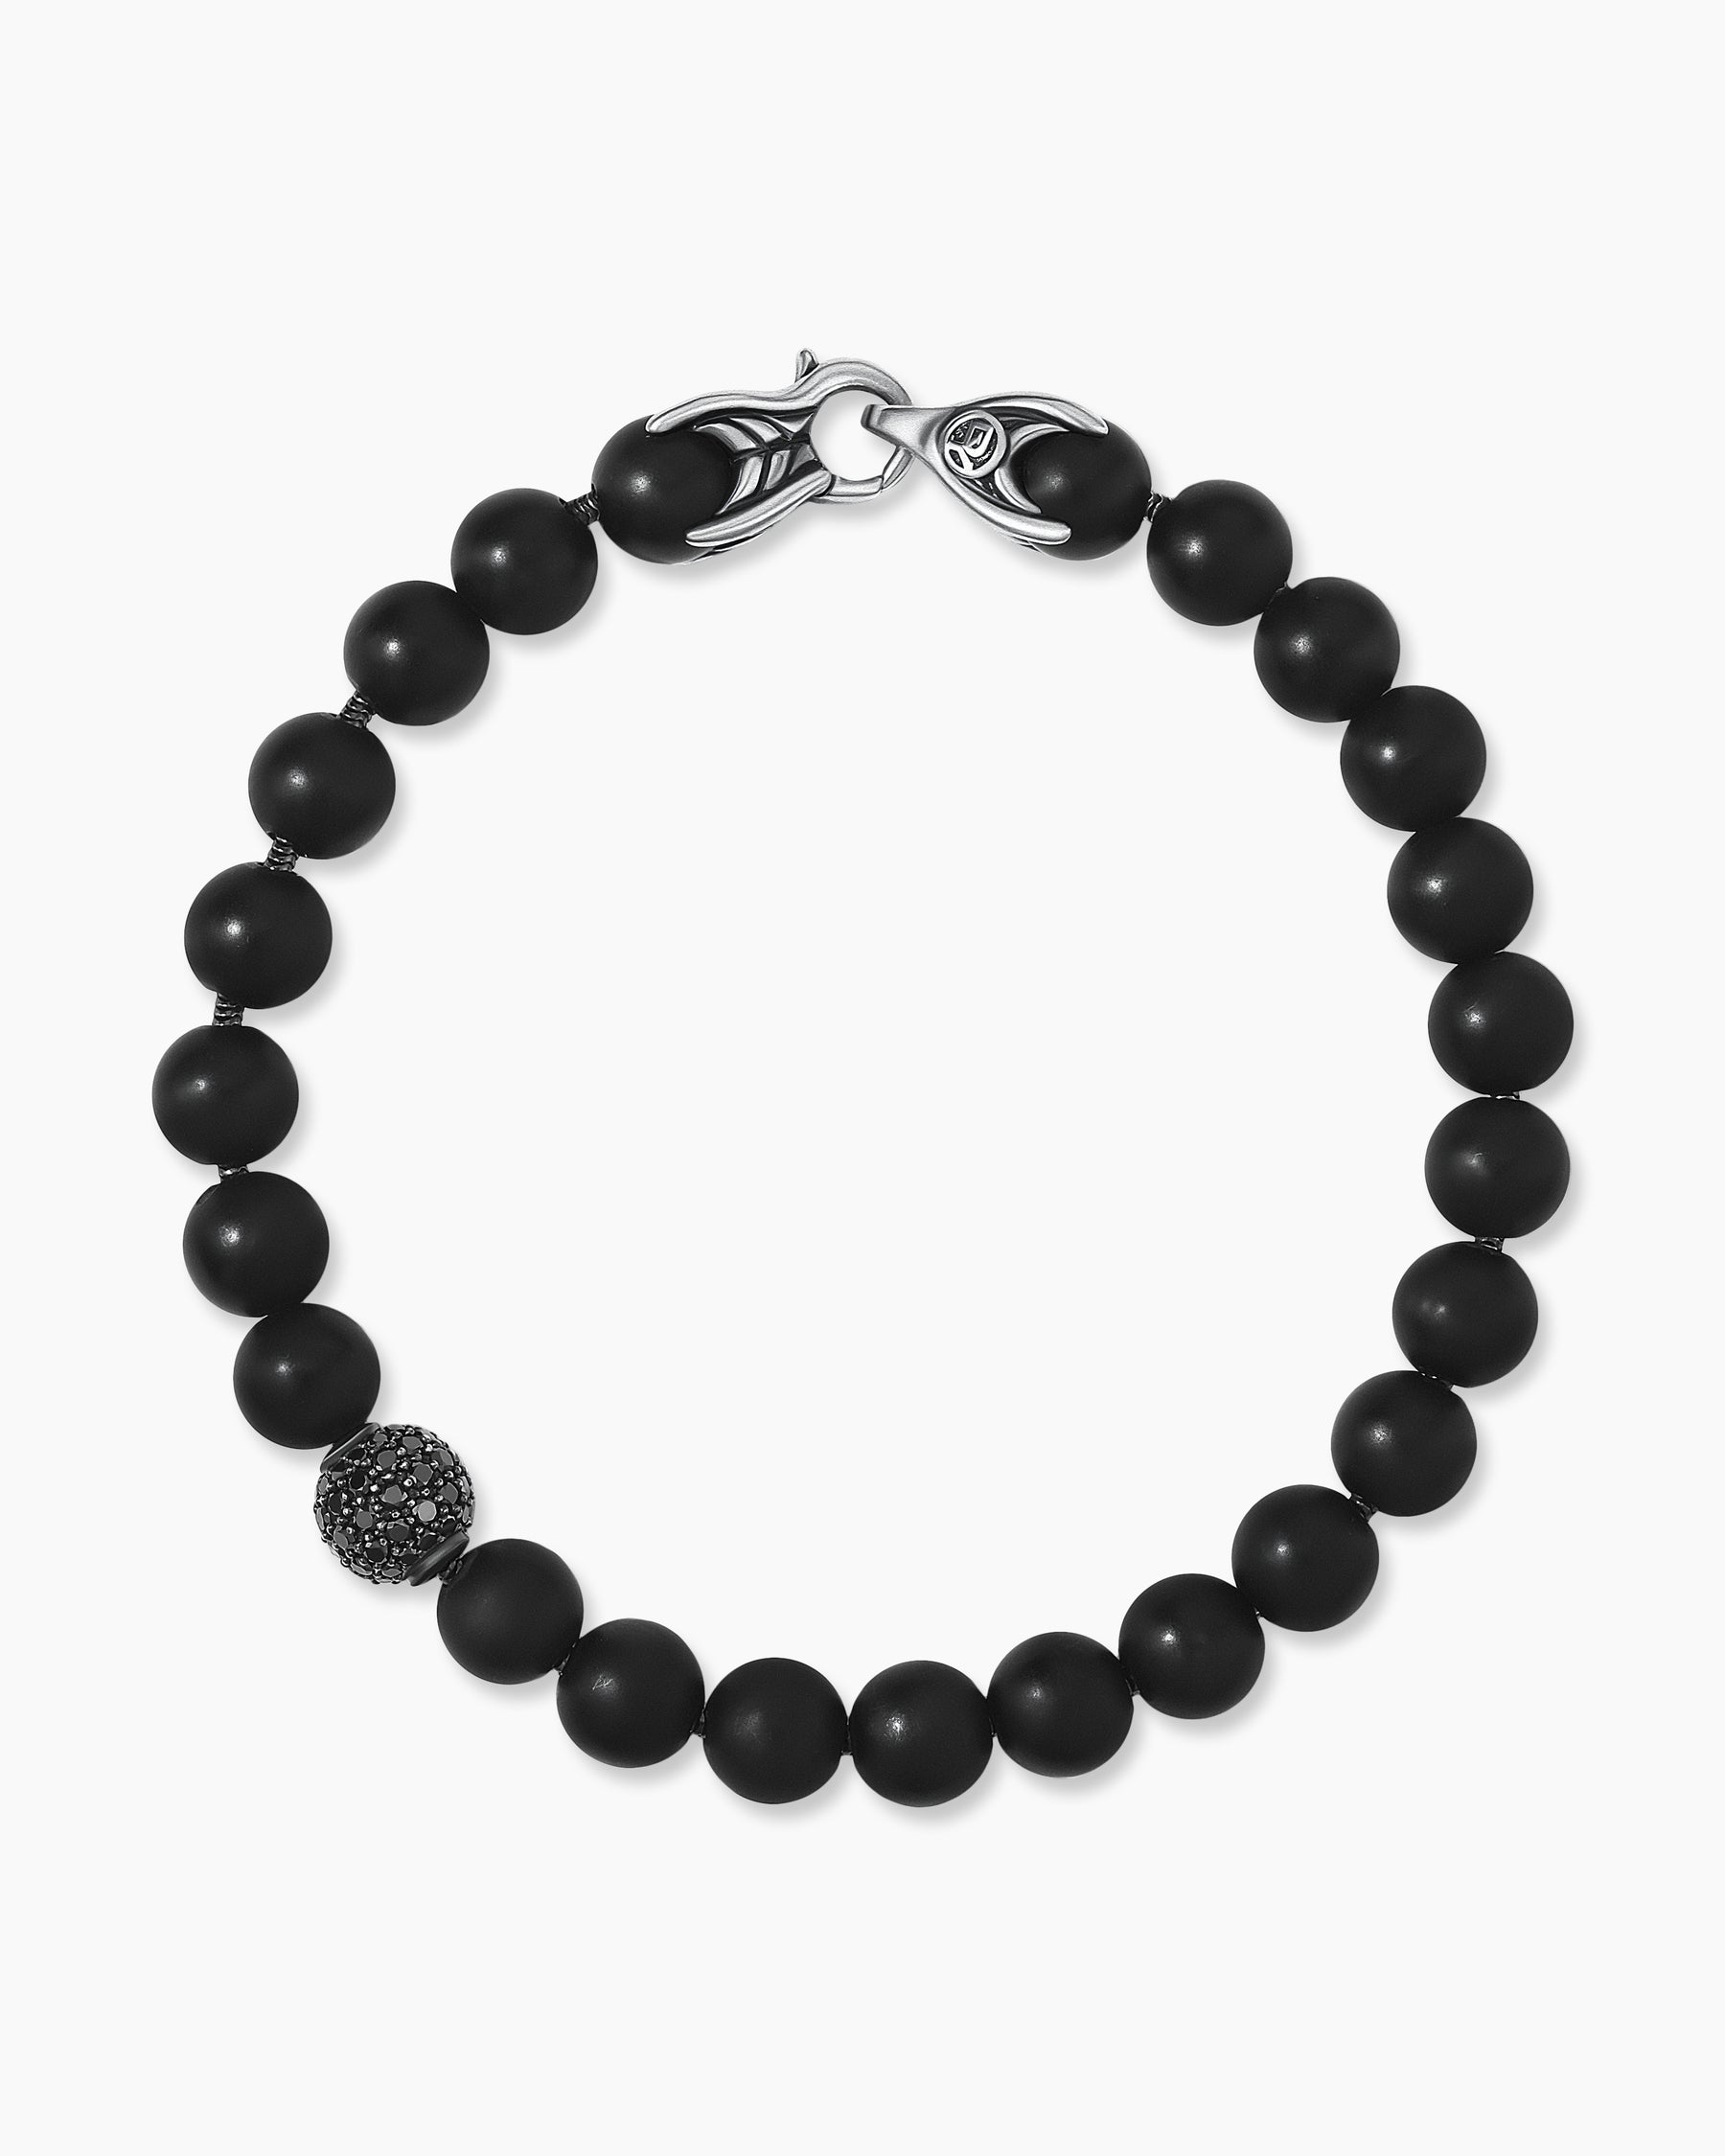 David Yurman Sterling Silver Spiritual Beads Bracelet with Black Onyx